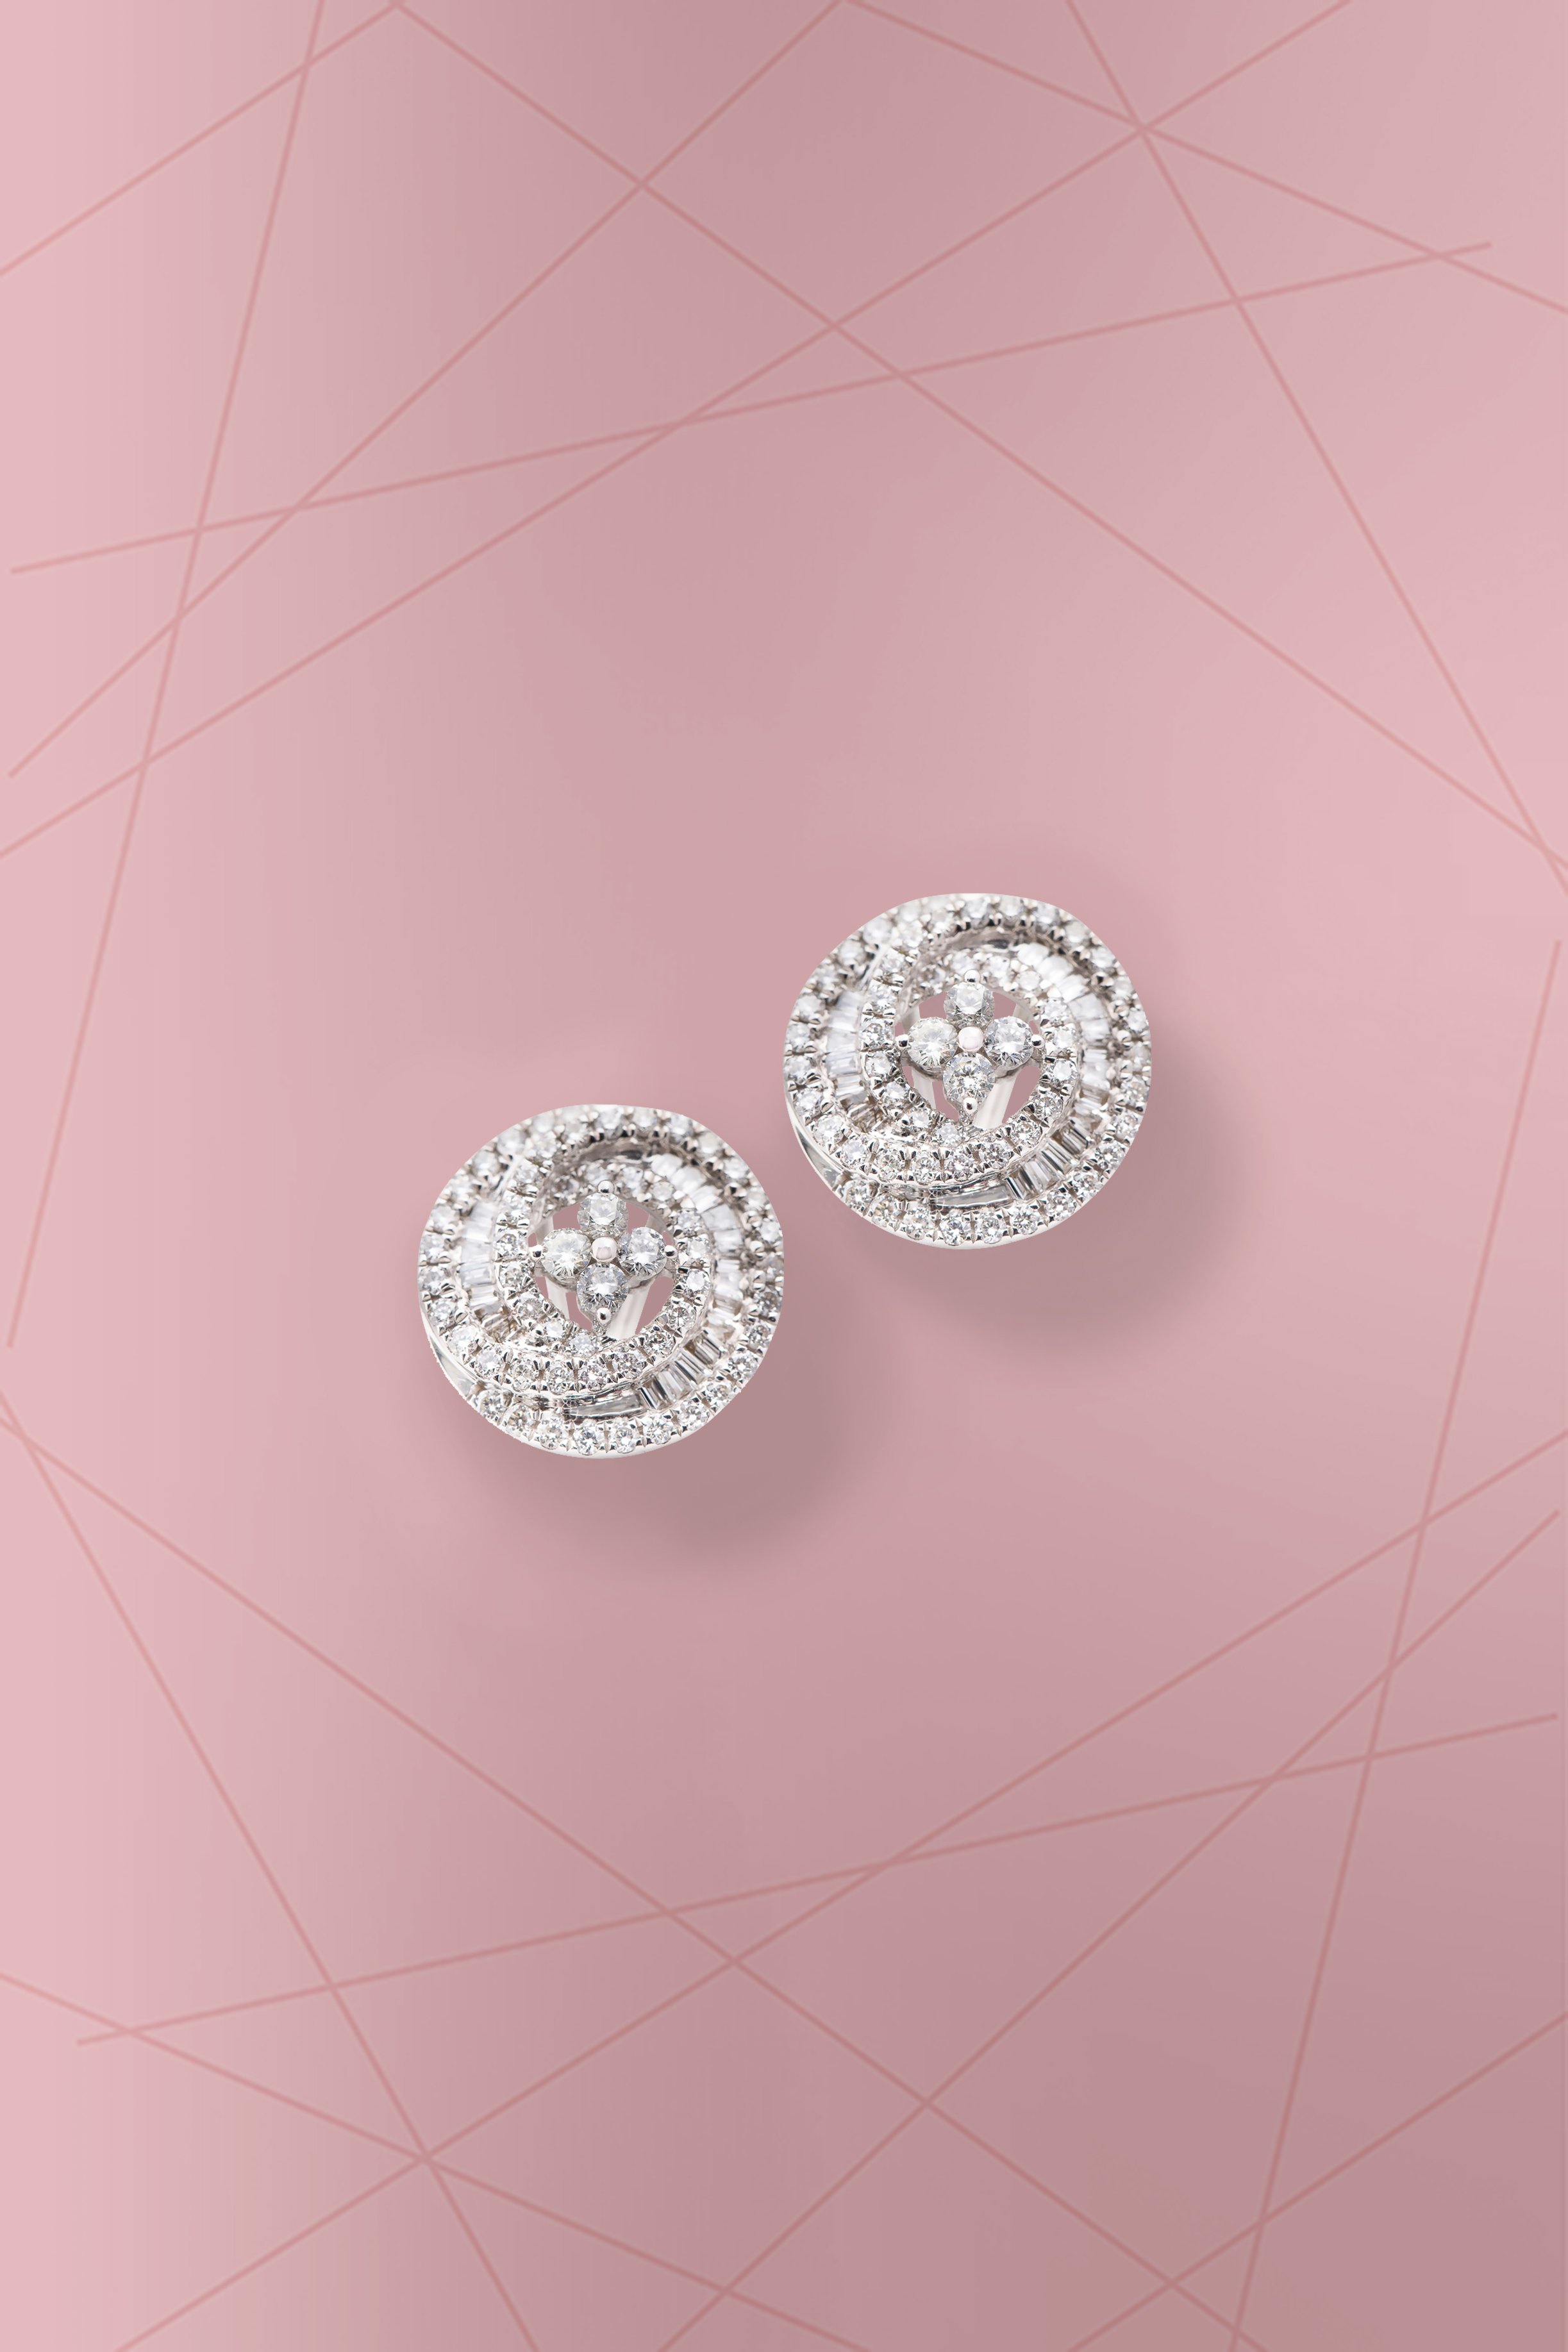 Buy diamond Jewellery and Earring | Online Diamond Jewellery | Aura Jewels